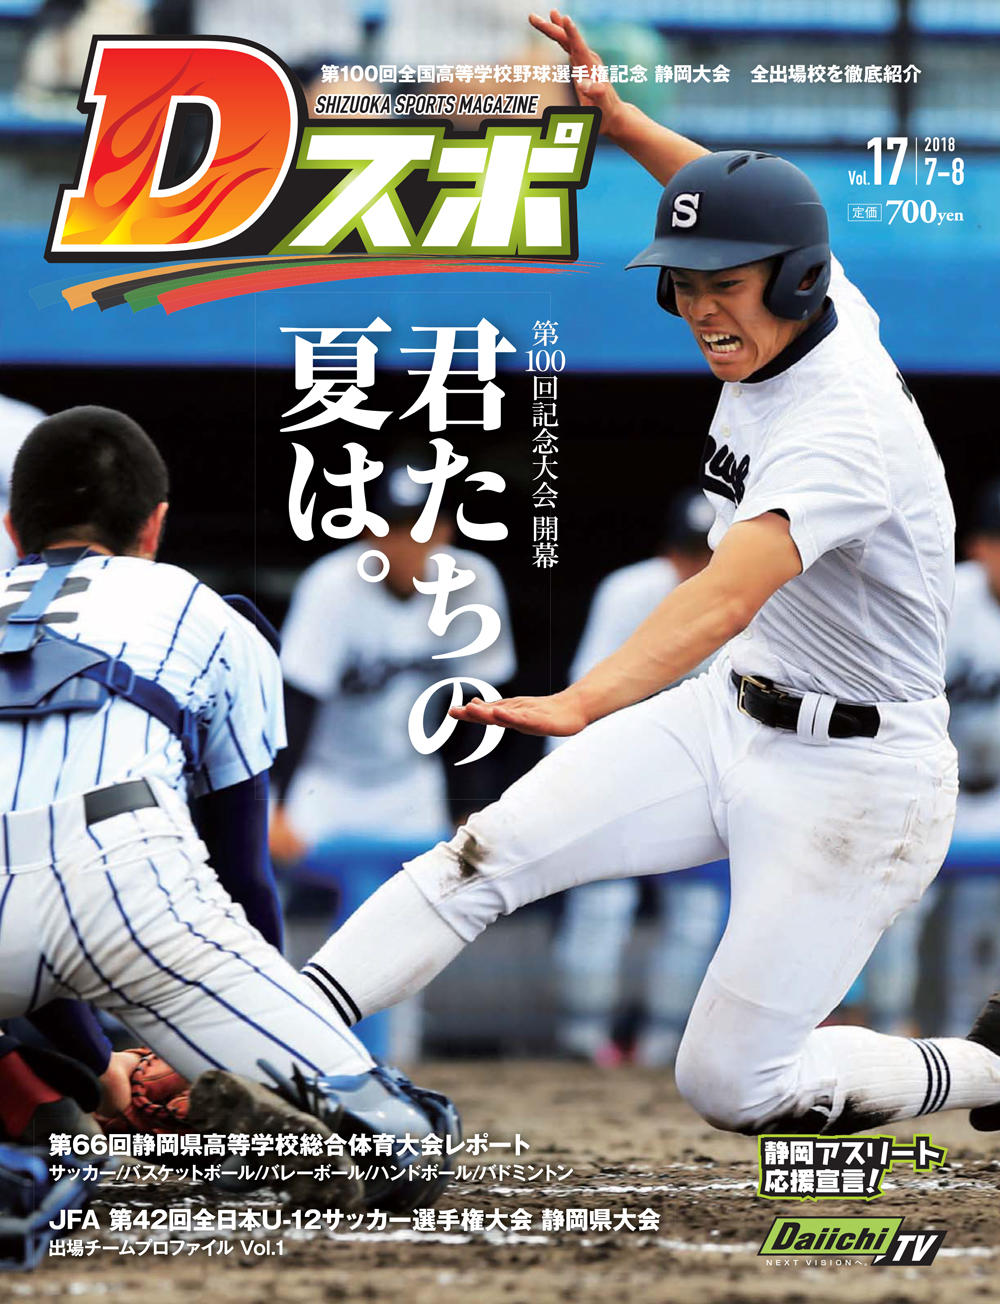 http://d-sports.shizuokastandard.jp/article/2018/17_H1.jpg